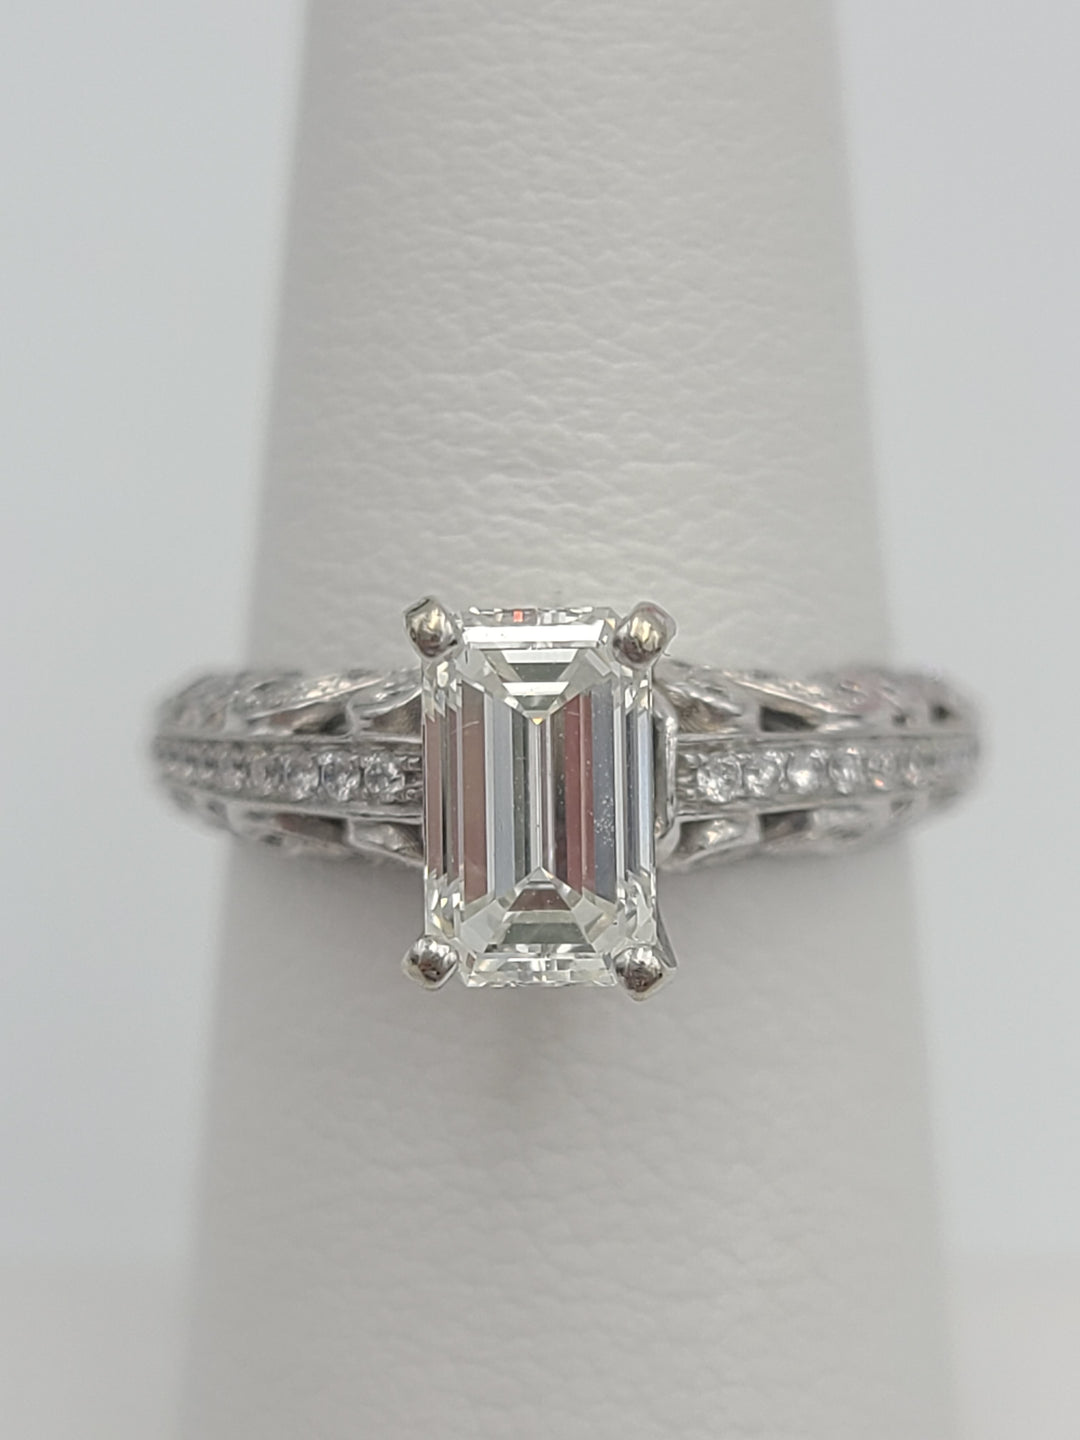 k809 Stunning Ladies 14kt White Gold Emerald Cut Diamond Engagement Ring